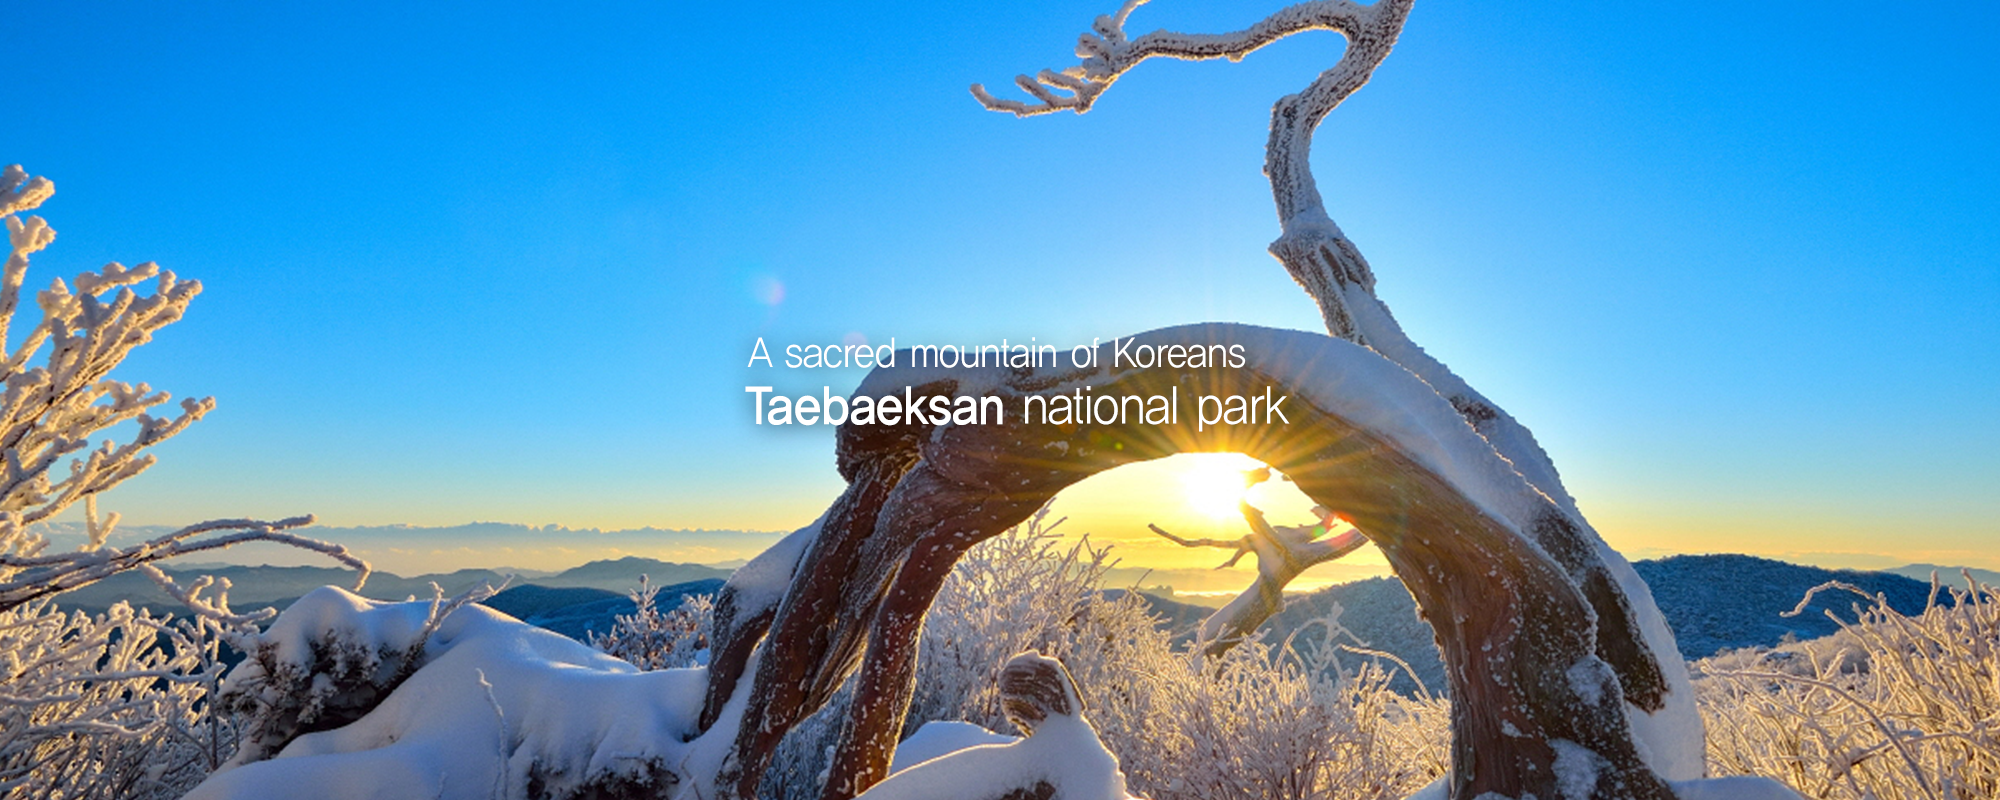 A sacred mountain of Koreans - Taebaeksan national park